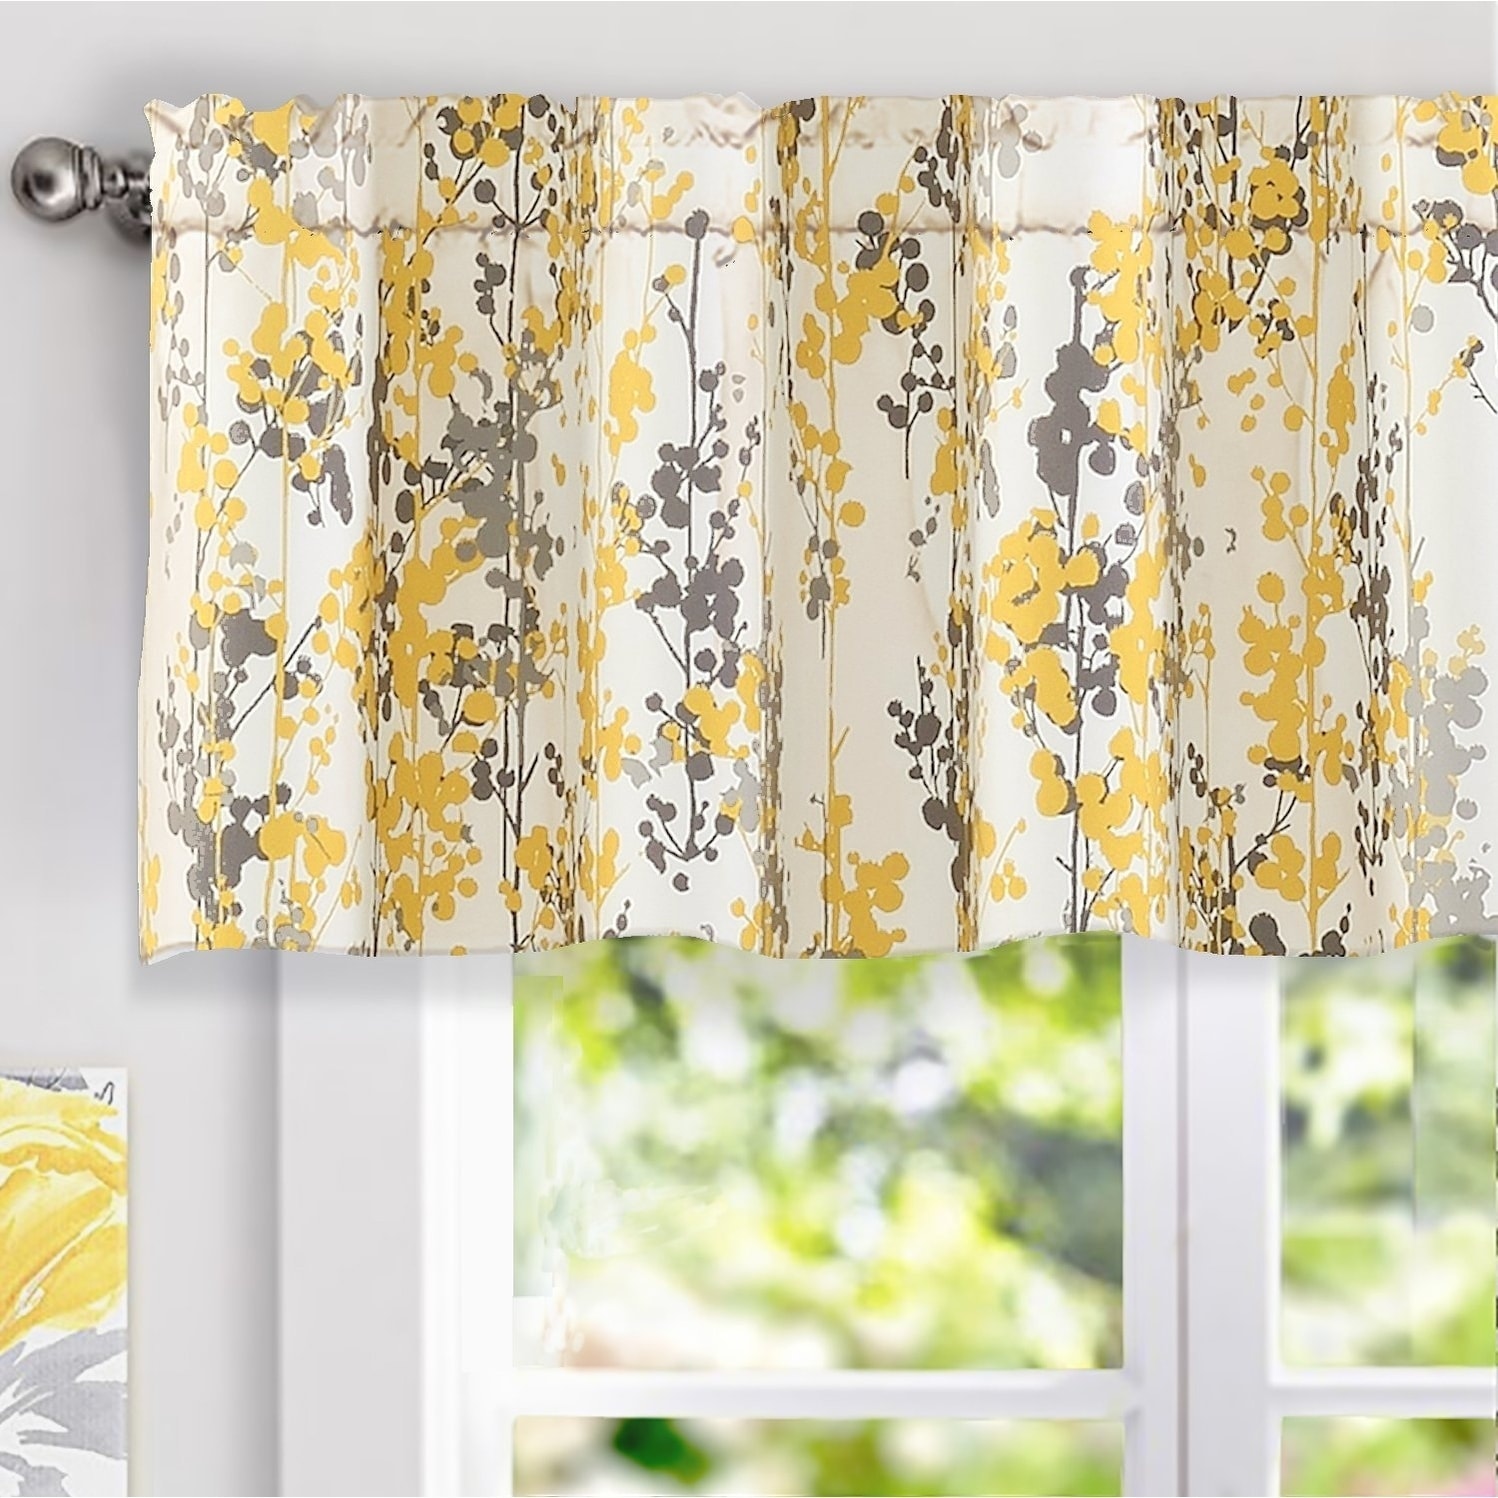 Yellow Gray Diamond Lattice Check stripe Kitchen fabric curtain topper Valance 